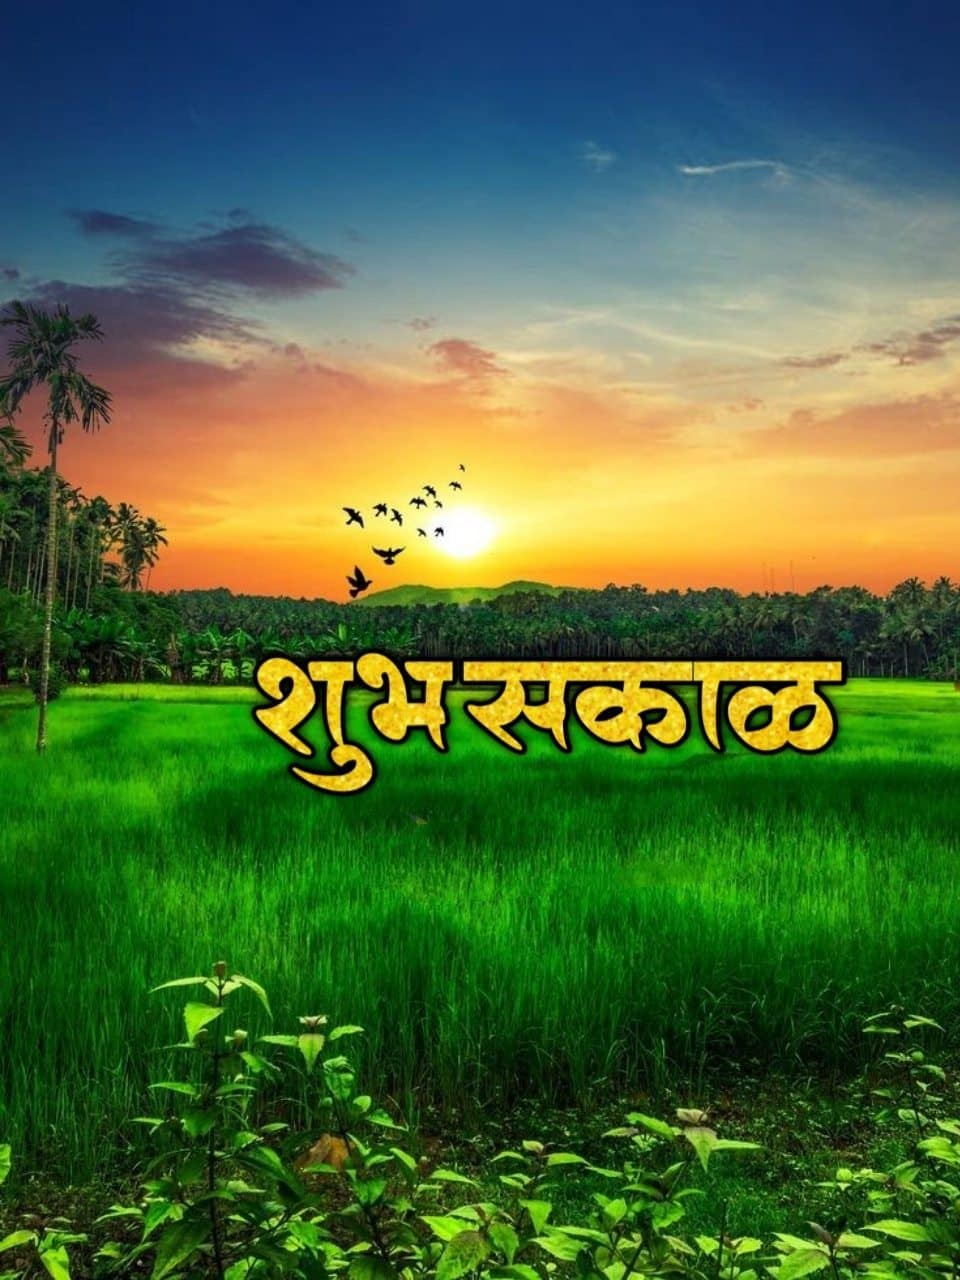 Shubh Sakal Nature Images